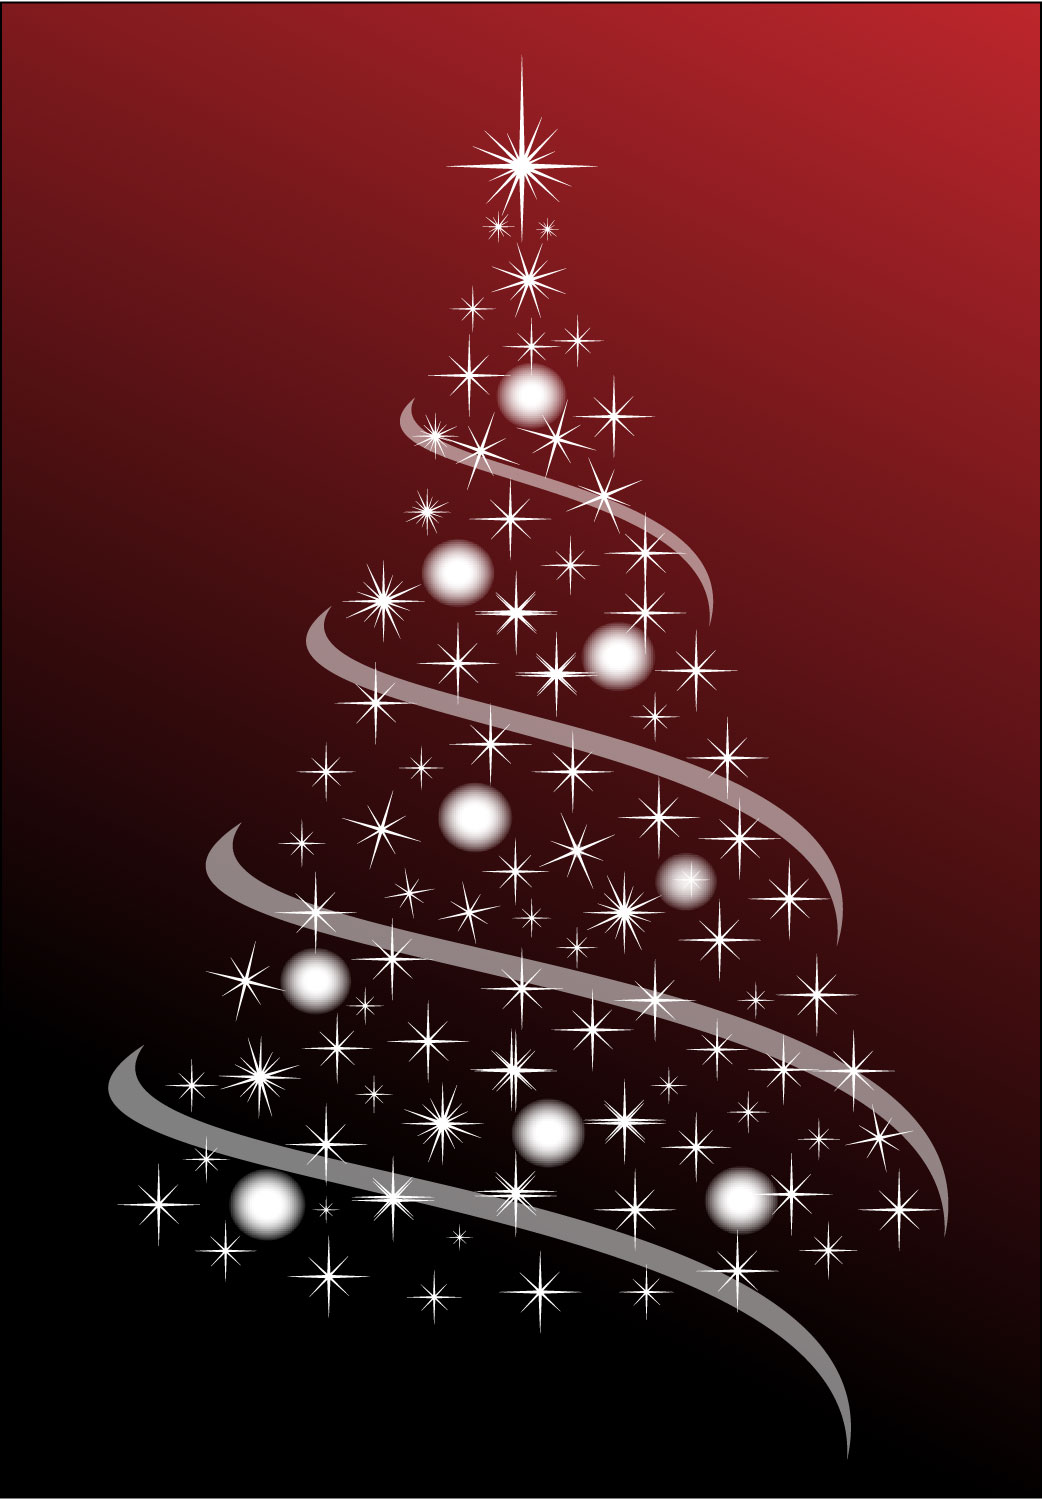 Christmas Tree Farm drawing free image download